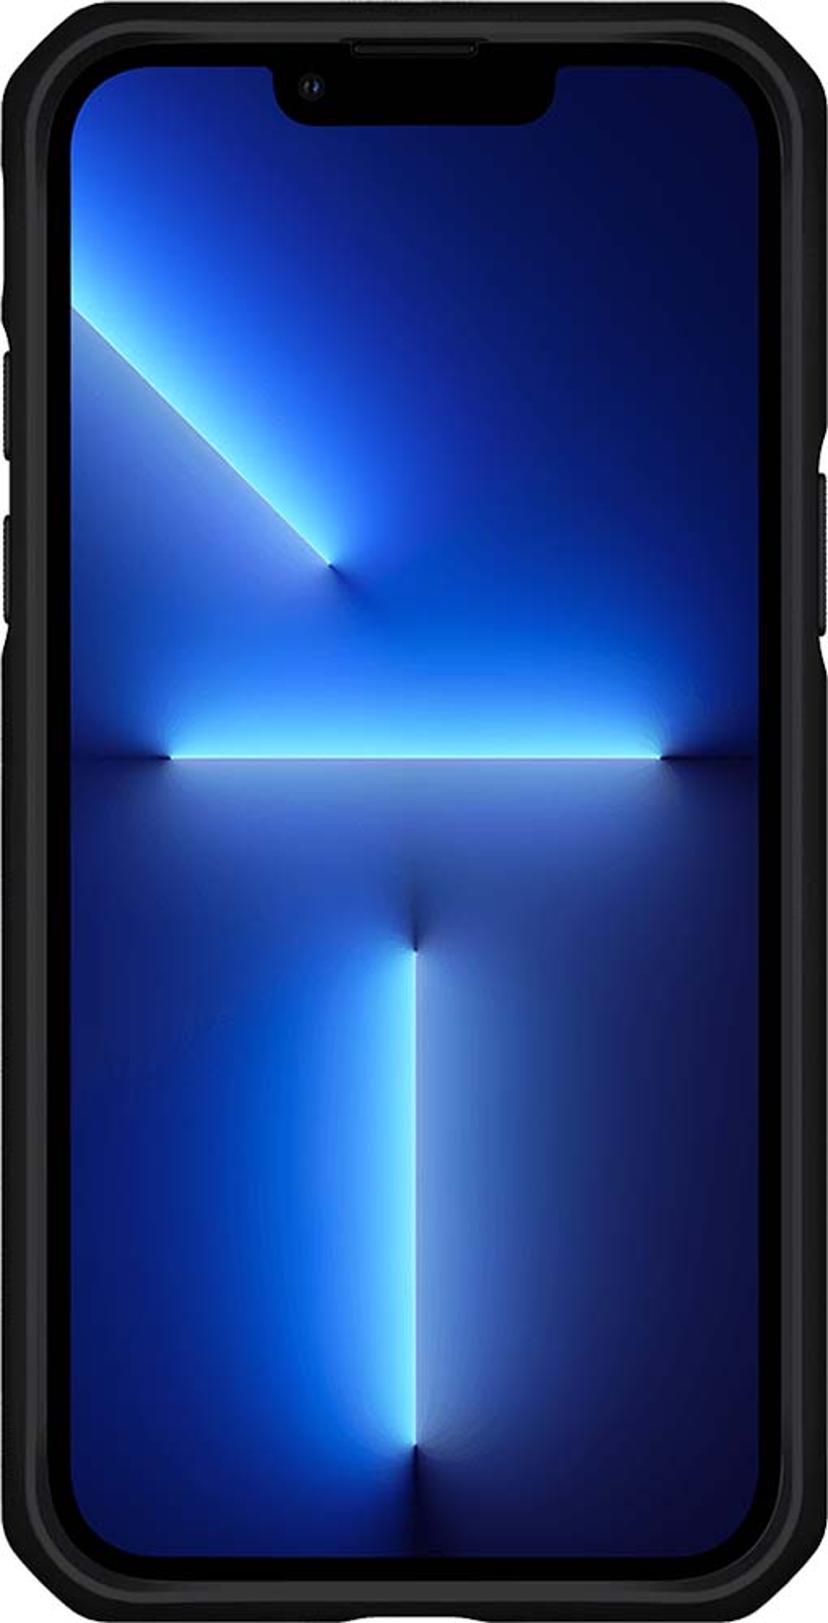 Cirafon Spectrum Solid Black Iphone12/13 Max 6.7" 2020 D54p iPhone 12 Pro Max, iPhone 13 Pro Max Musta